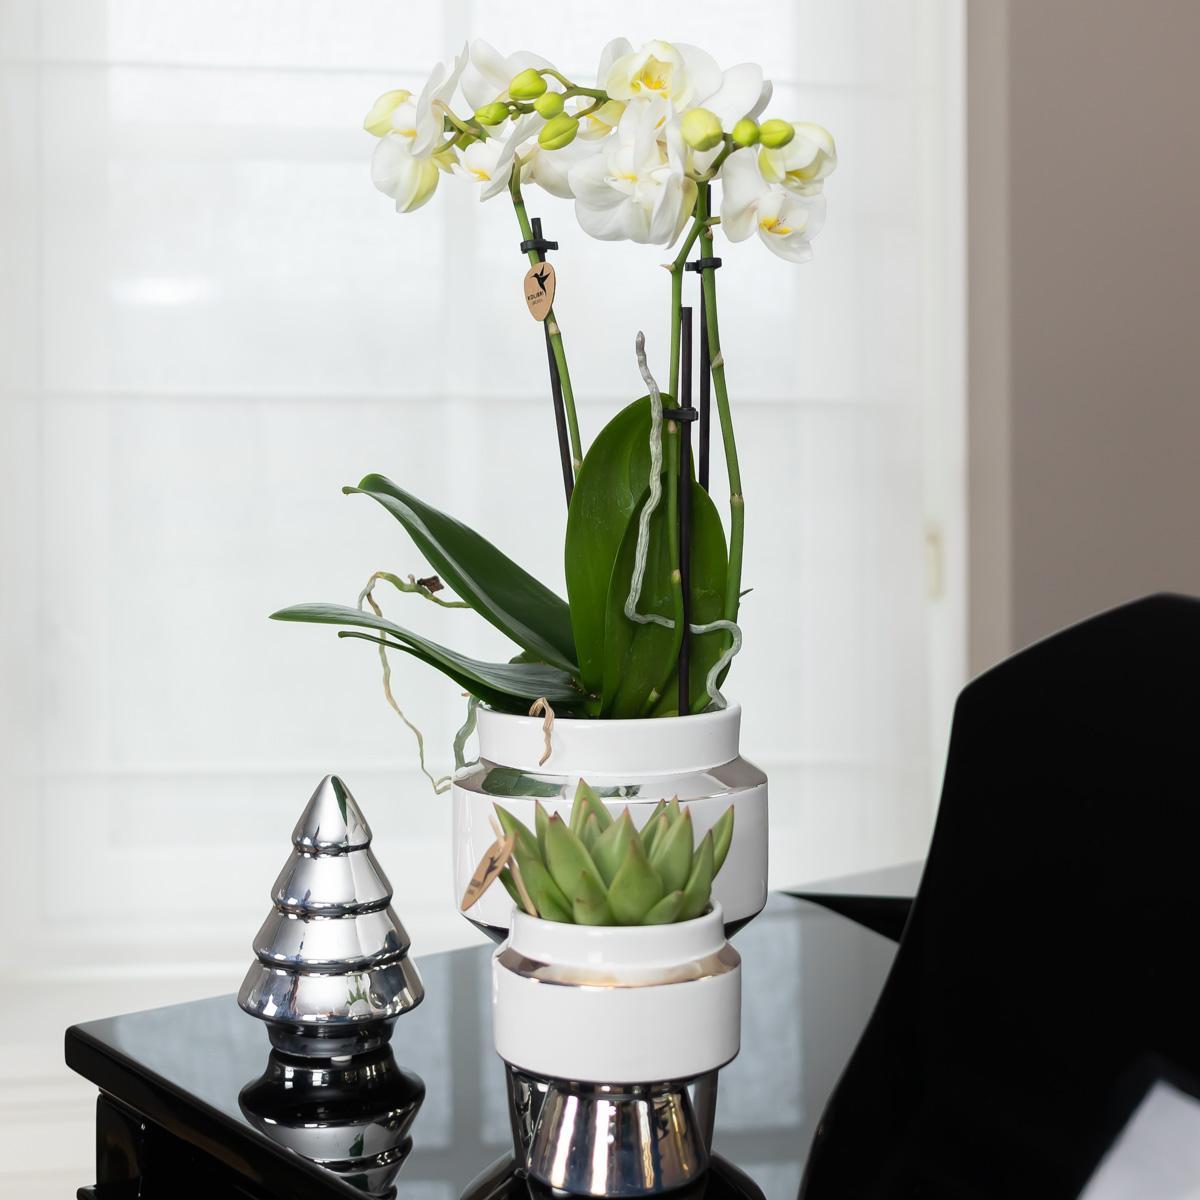 Kolibri Orchids | Witte Phalaenopsis orchidee – Amabilis + Le Chic sierpot zilver – potmaat Ø9cm – 40cm hoog | bloeiende kamerplant in bloempot - vers van de kweker